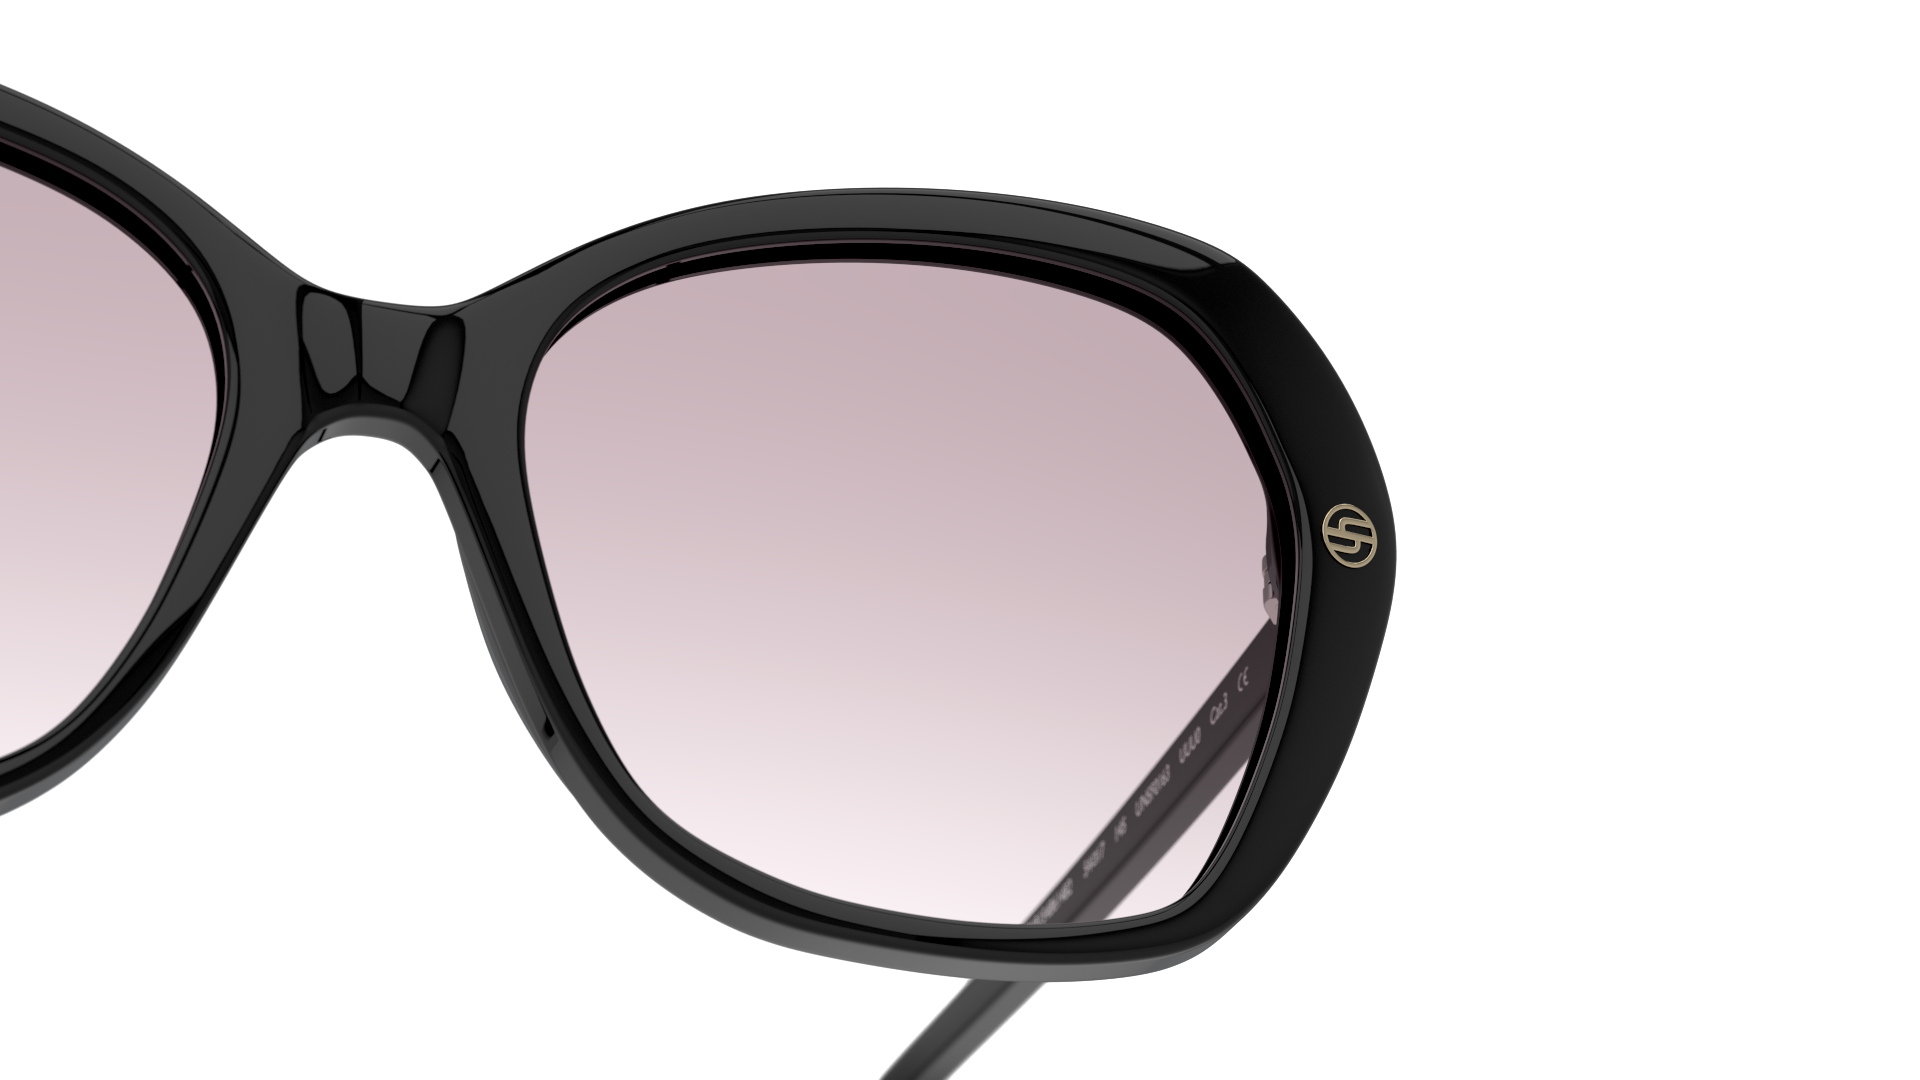 Detail01 Unofficial UNSF0163 (BBG0) Sunglasses Grey / Black